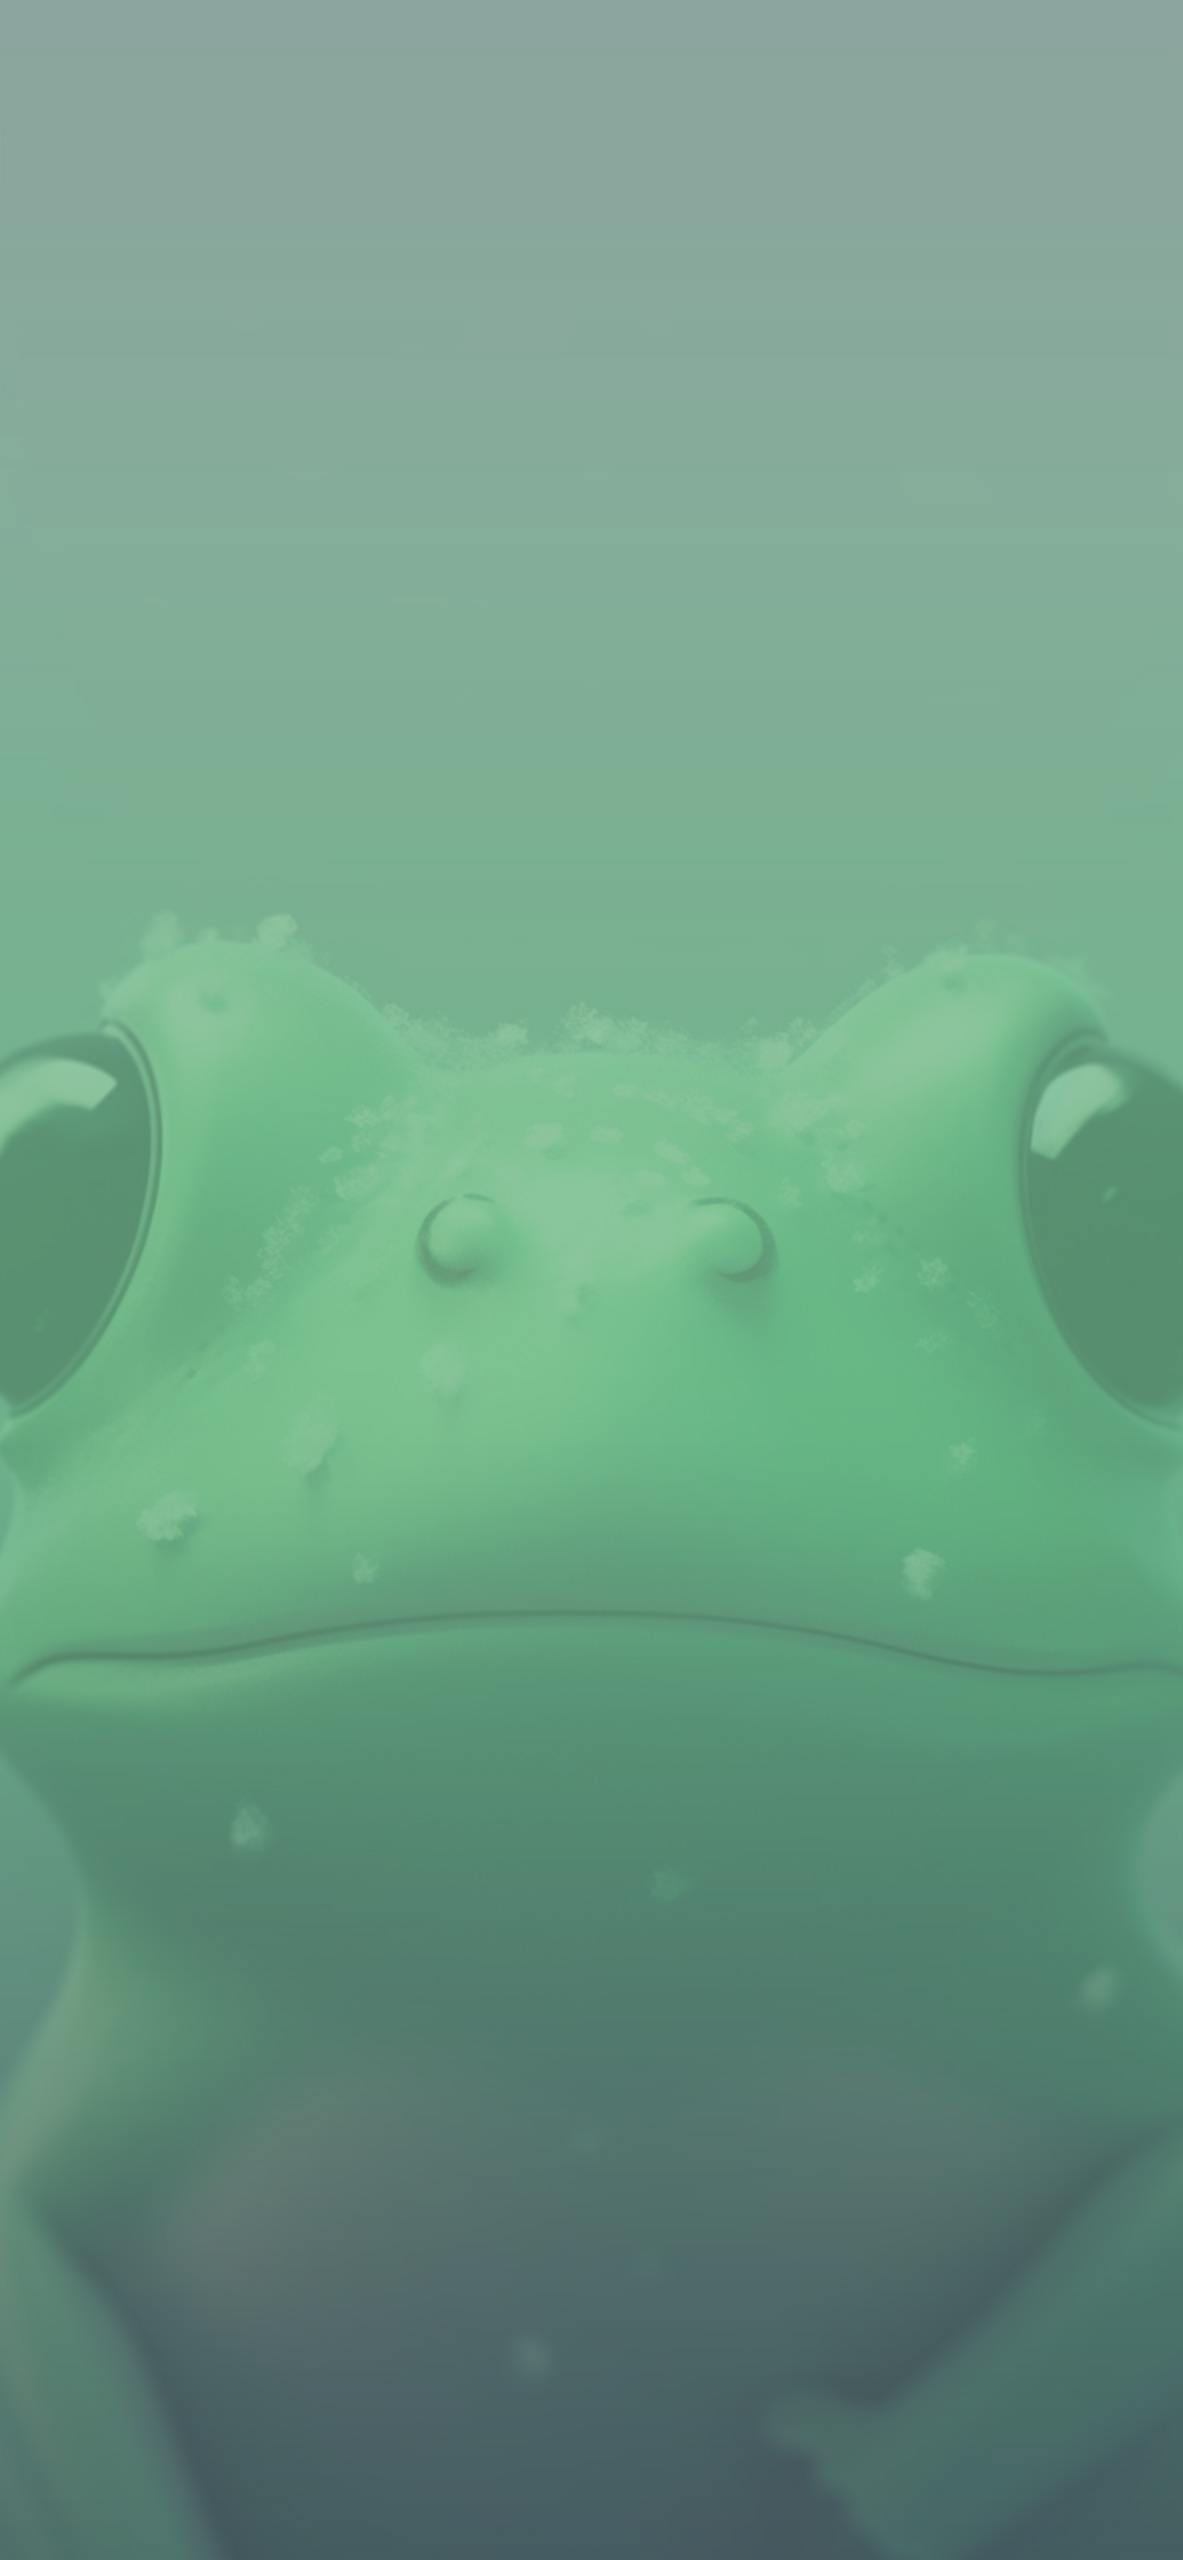 green frog aesthetic background